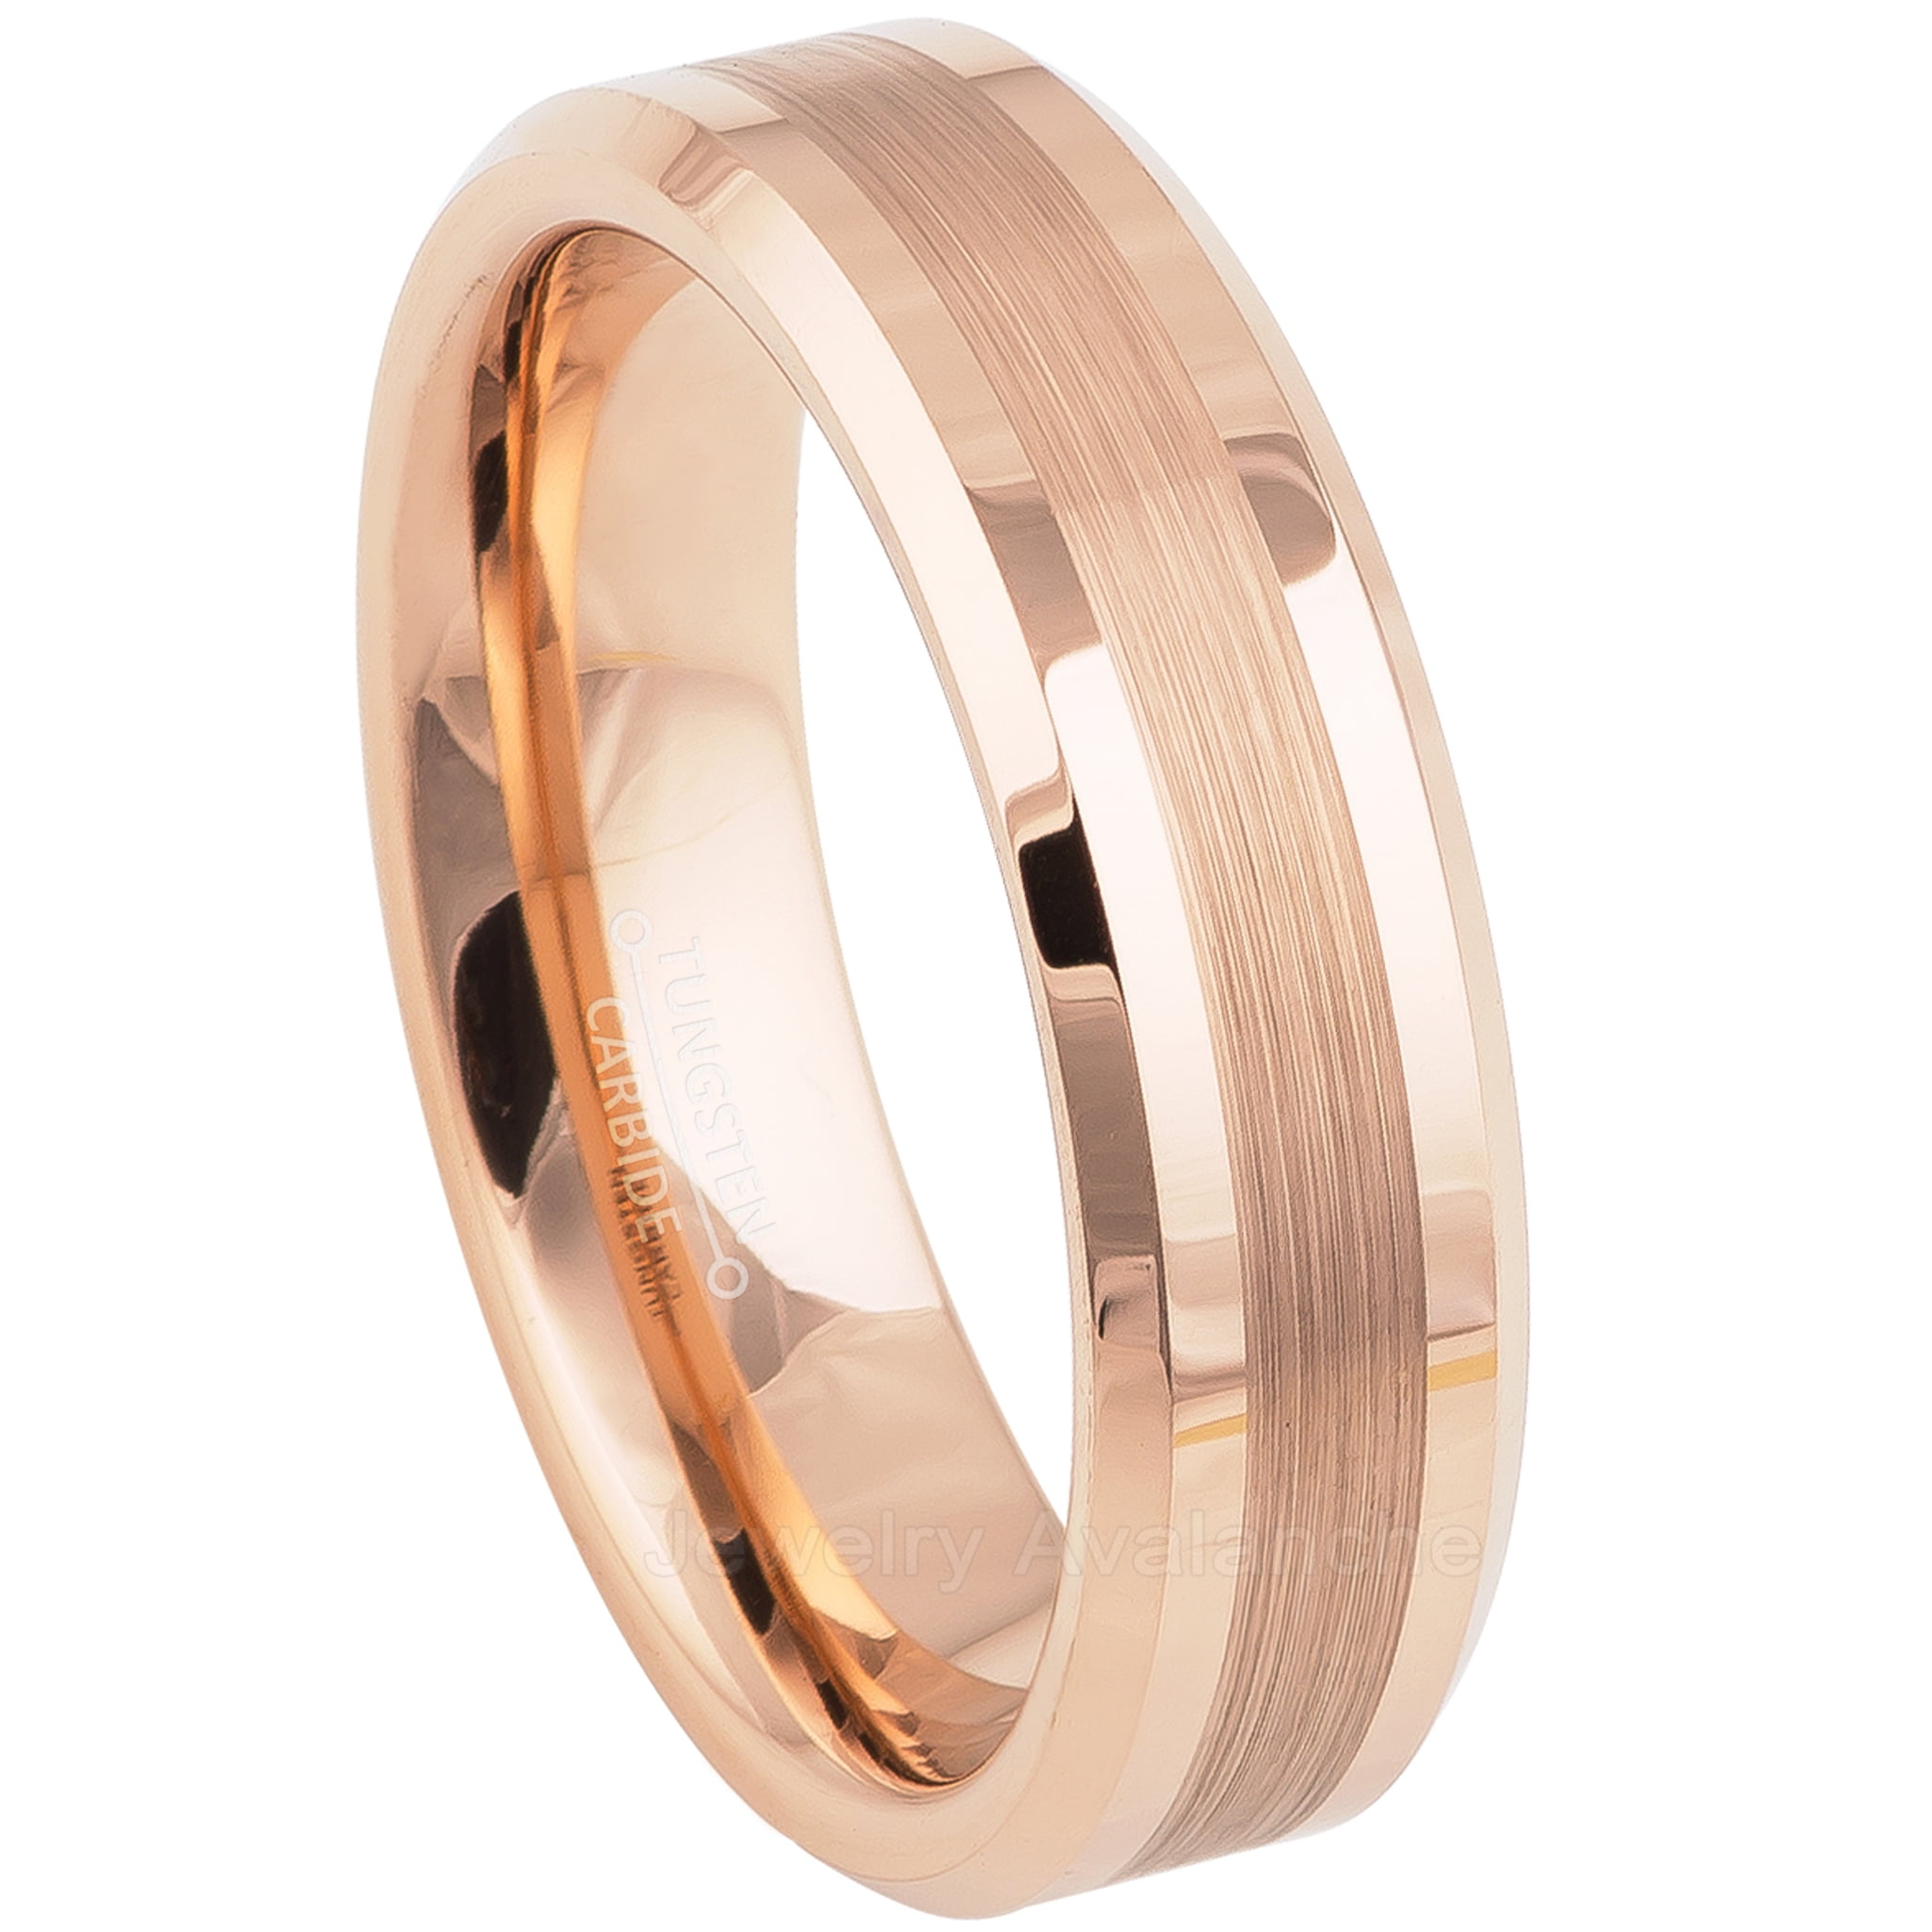 Tungsten Wedding Band Ring 10mm 8mm 6mm 4mm for Men Women Comfort Fit 18k Rose Gold Plated Beveled Edge Brushed Polished FREE Custom Laser Engraving Lifetime Guarantee